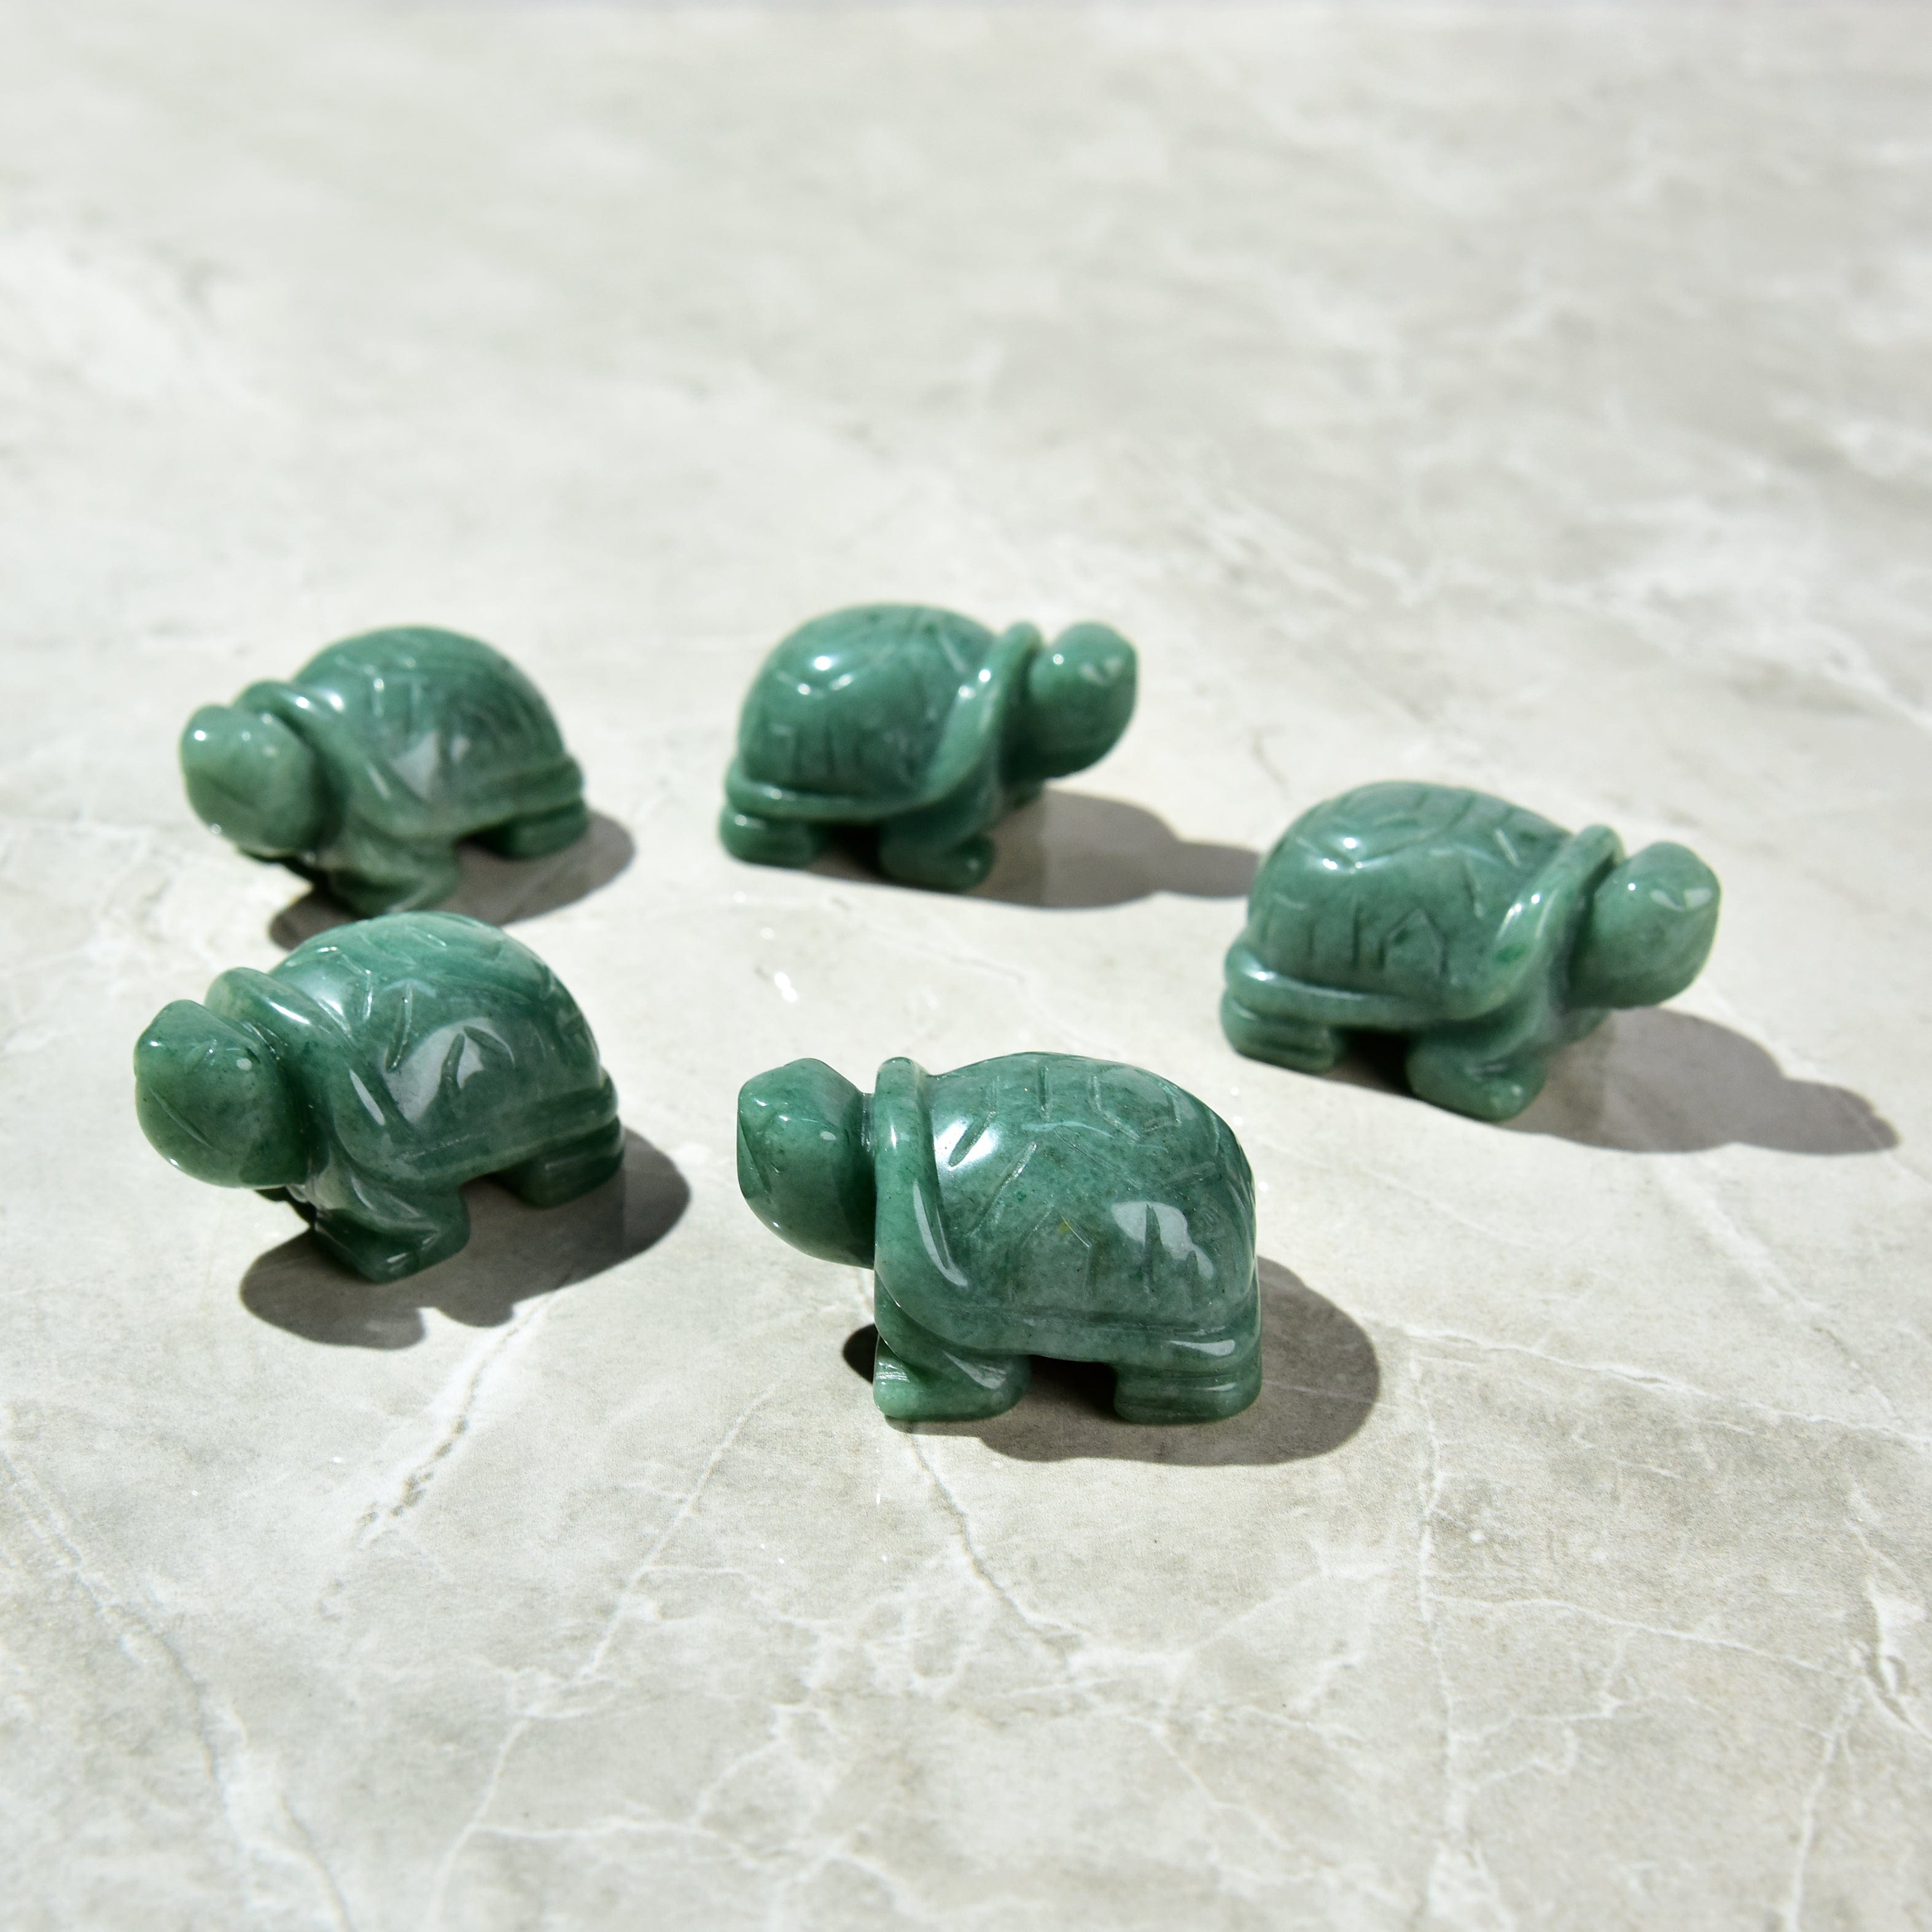 Kalifano Gemstone Carvings Aventurine Turtle 2'' Natural Gemstone Carving CV14-T-AV